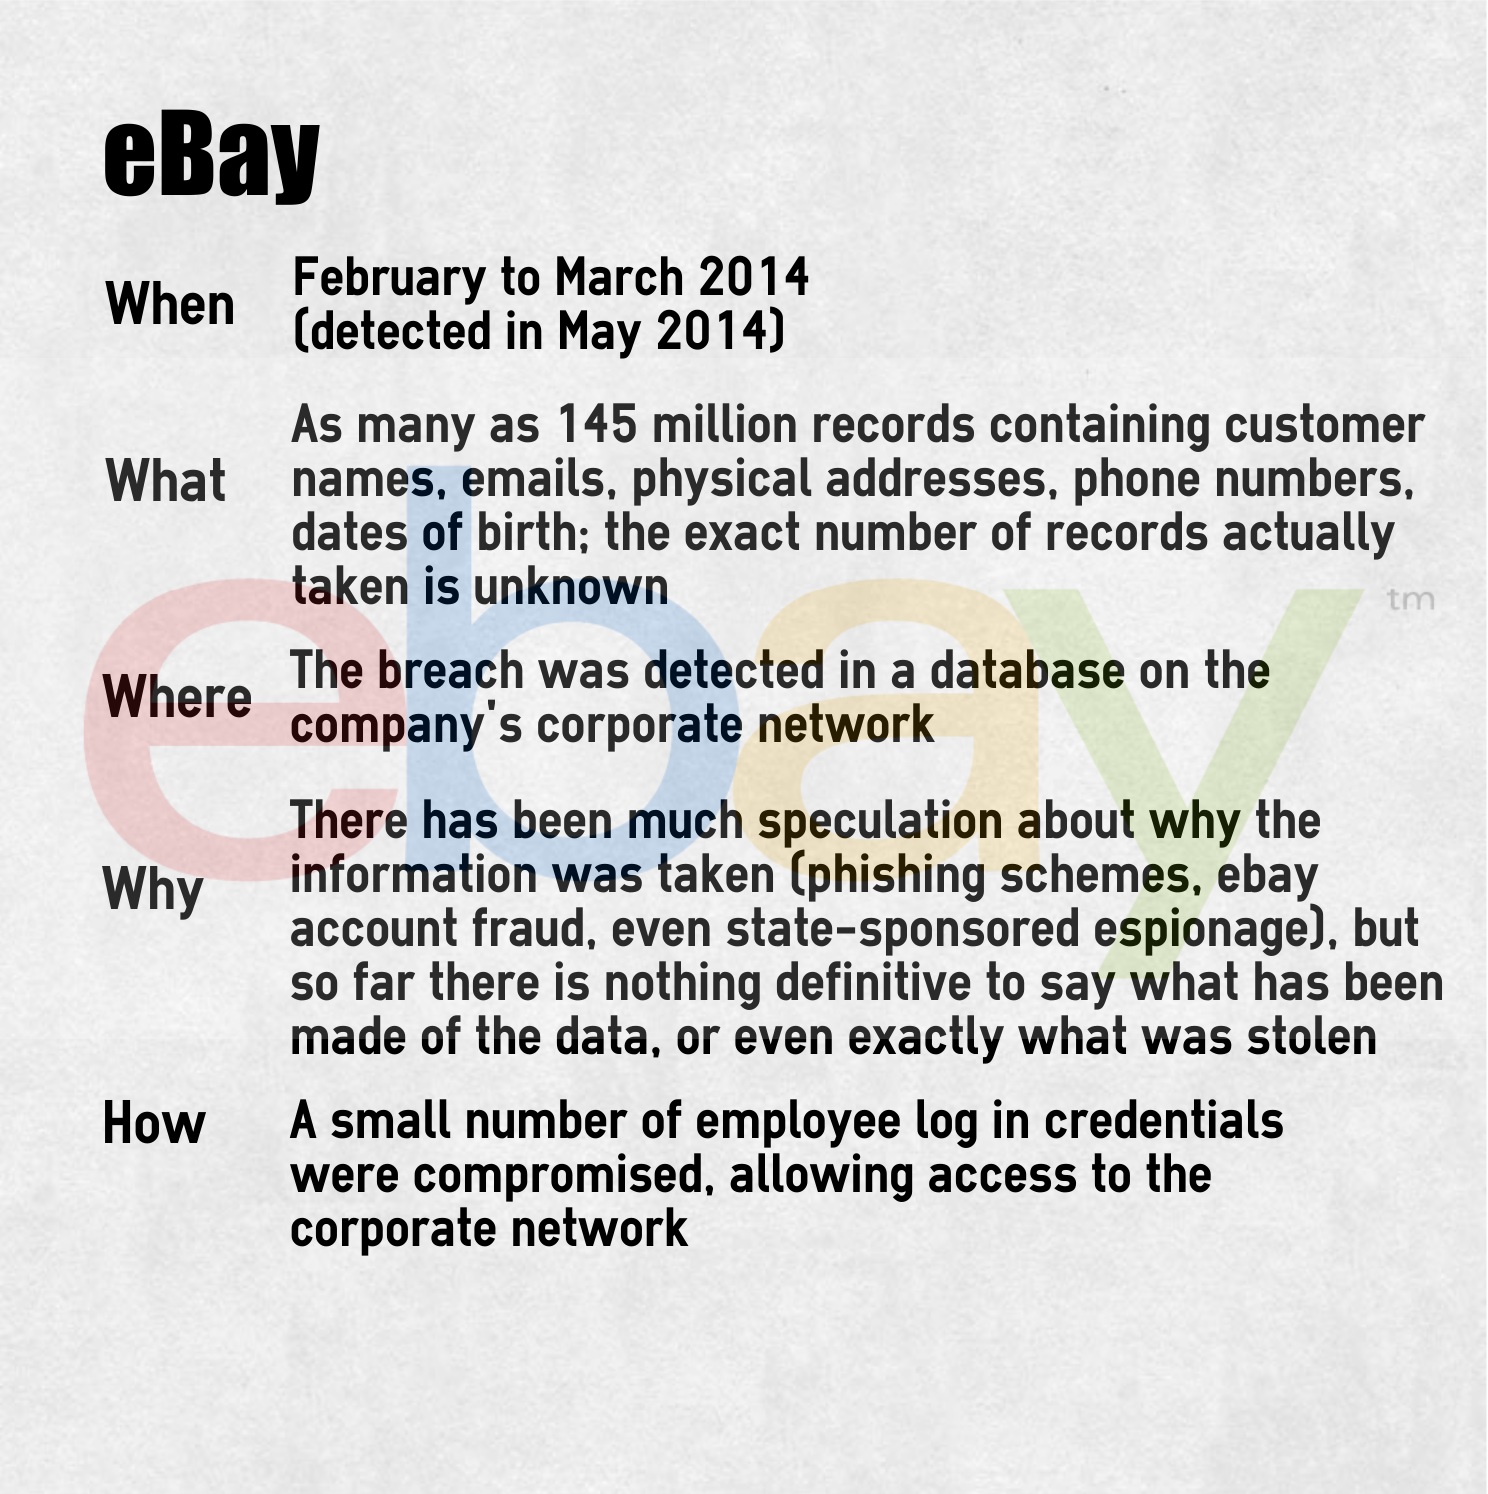 ebay data breach 2014 case study pdf